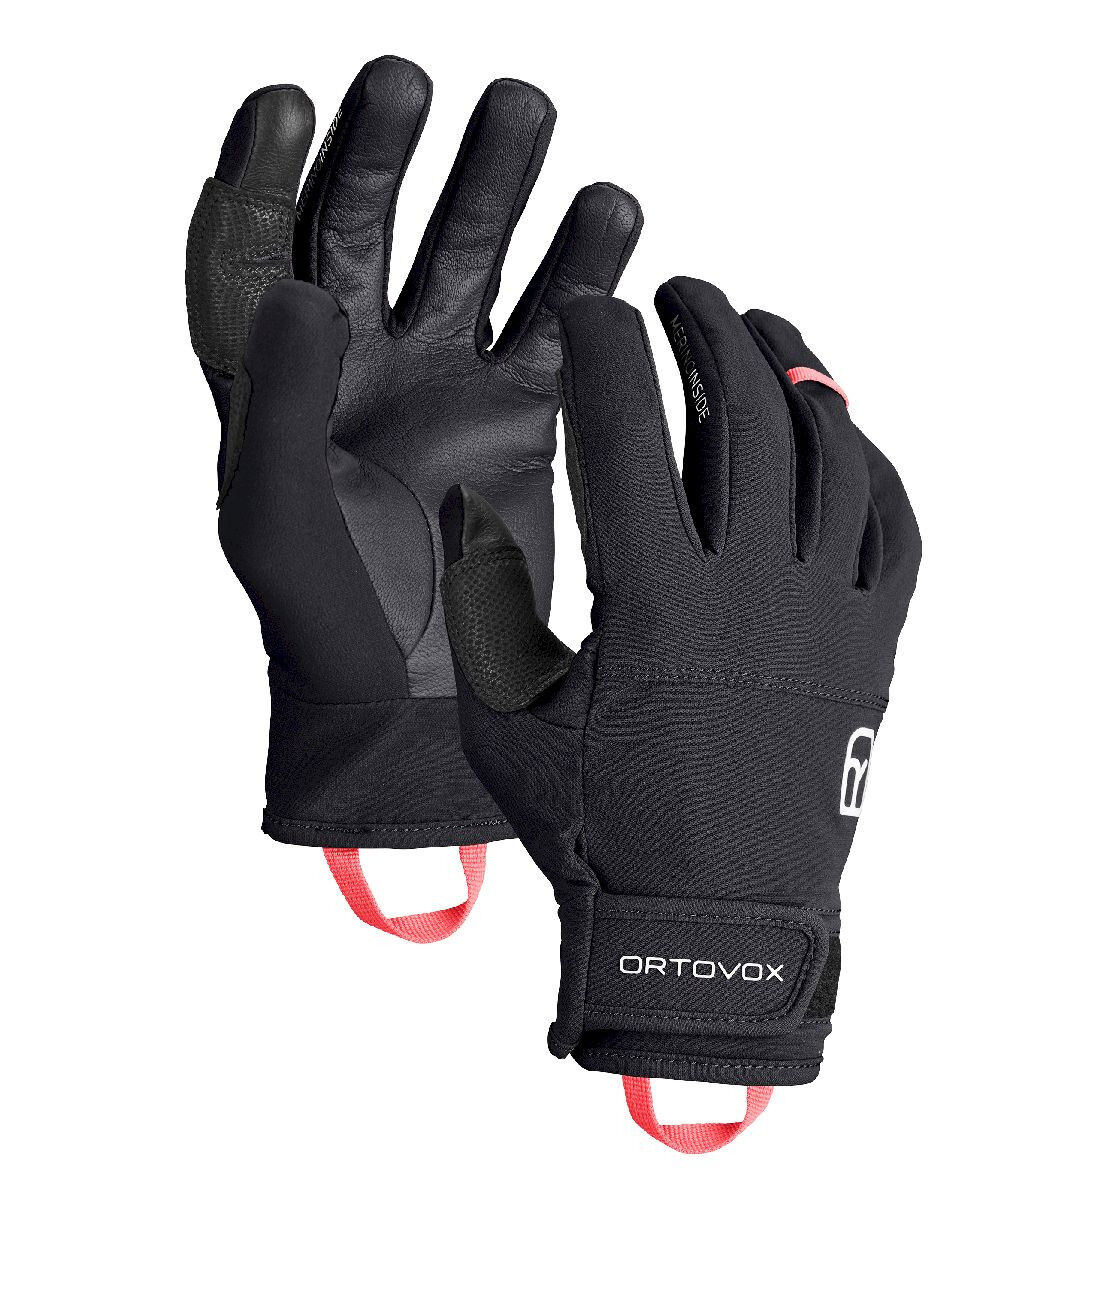 Ortovox Tour Light Glove - Hiihtohanskat - Naiset